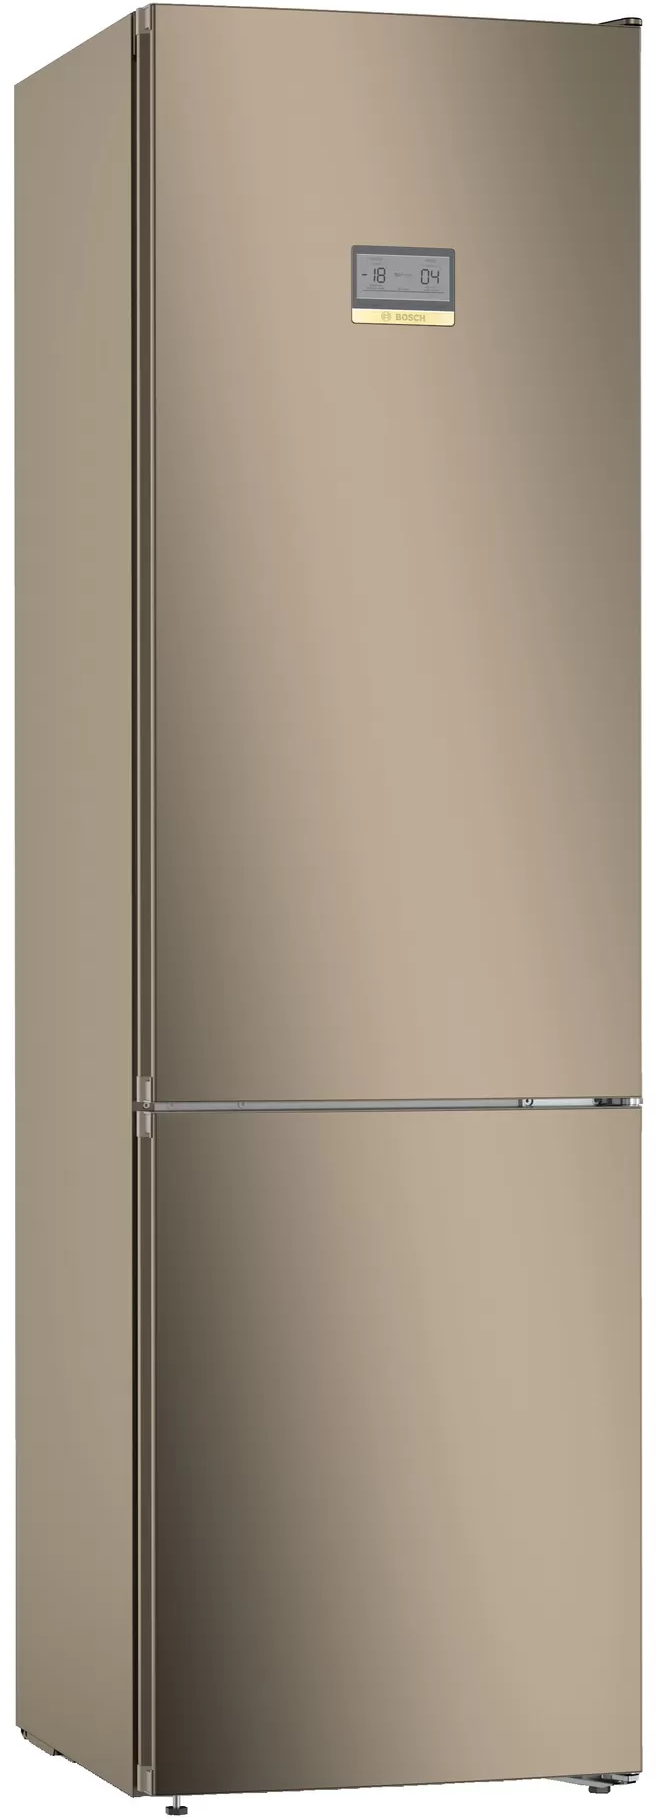 Двухкамерный холодильник BOSCH KGN39AV31R